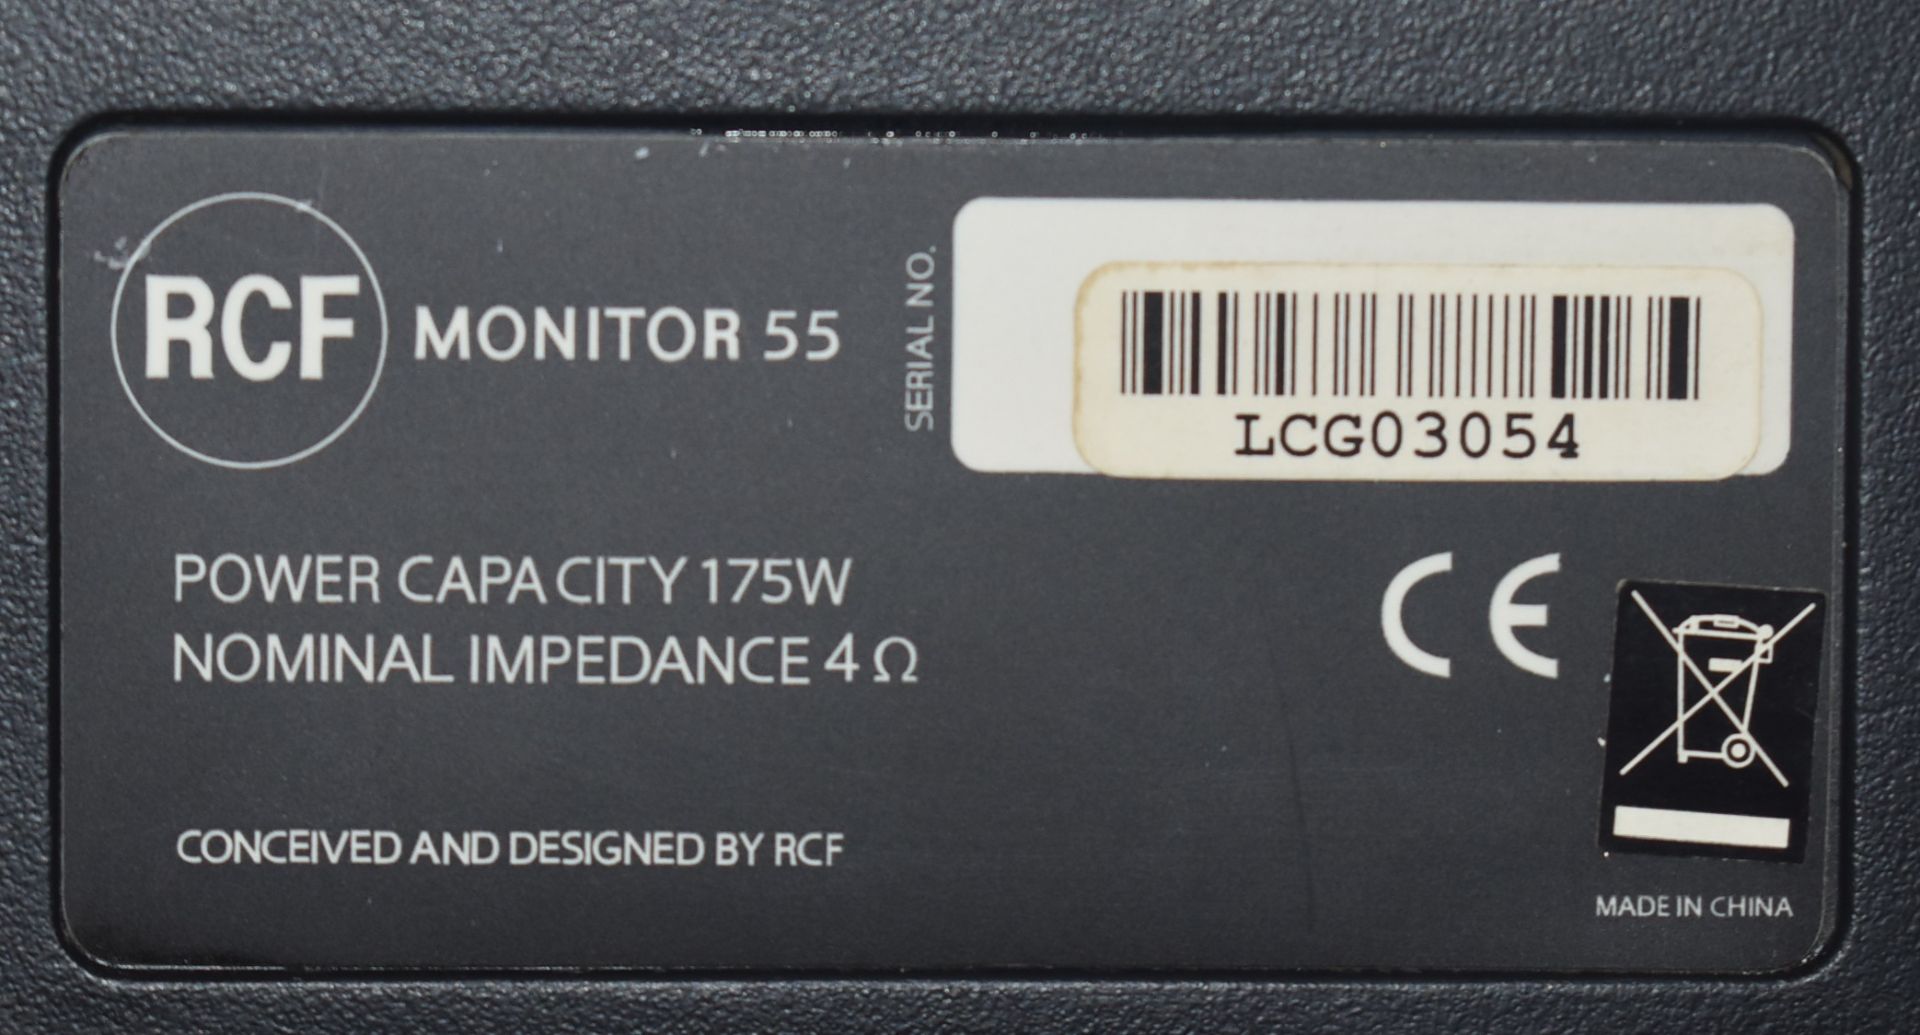 2 x RCF 175-Watt Two-Way Compact Monitor Speakers - Model Monitor 55 - RRP £246 - Ref: JP/JP - CL700 - Image 2 of 3